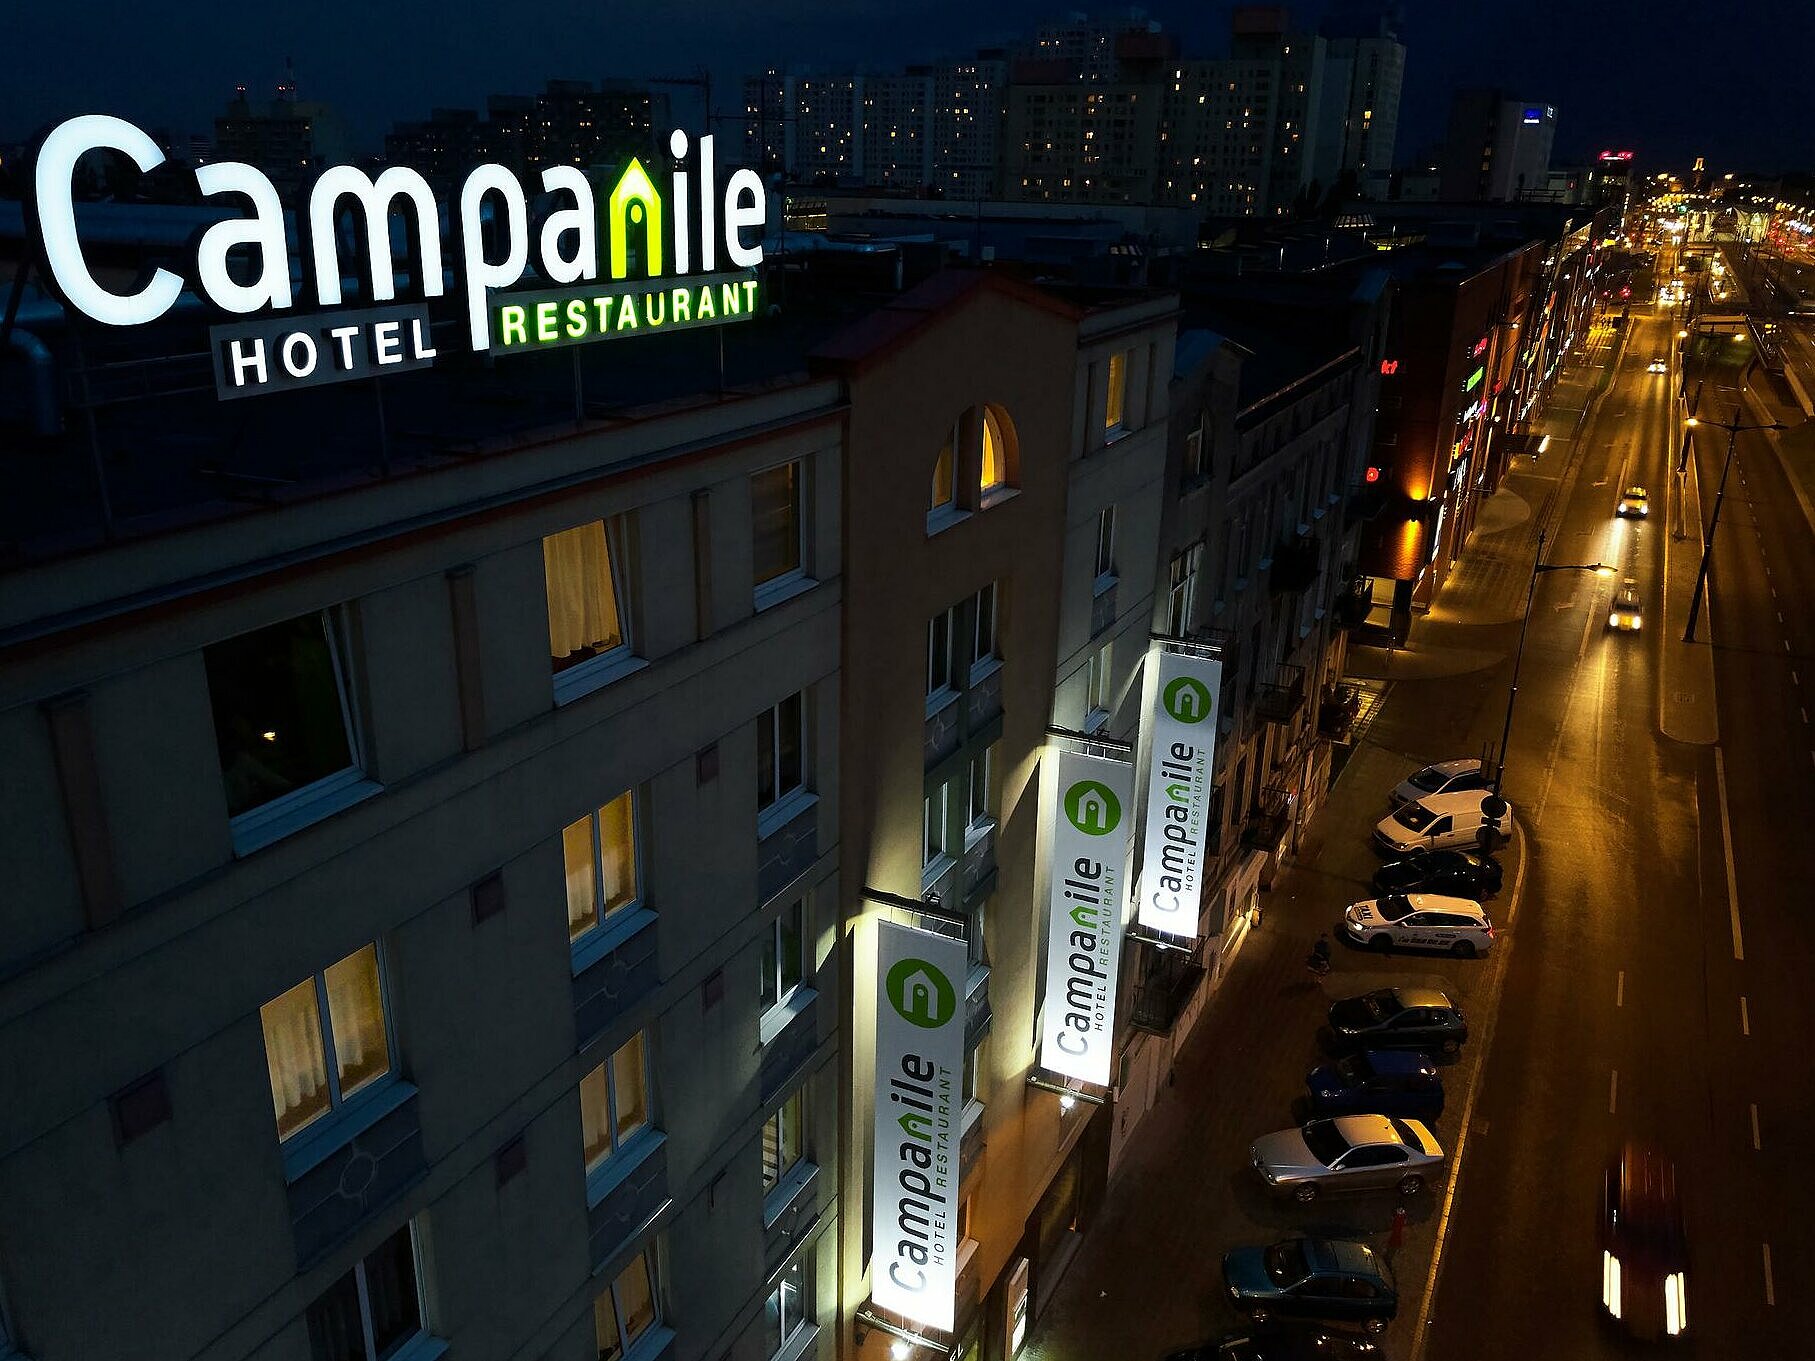 Campanile Hotel by night  